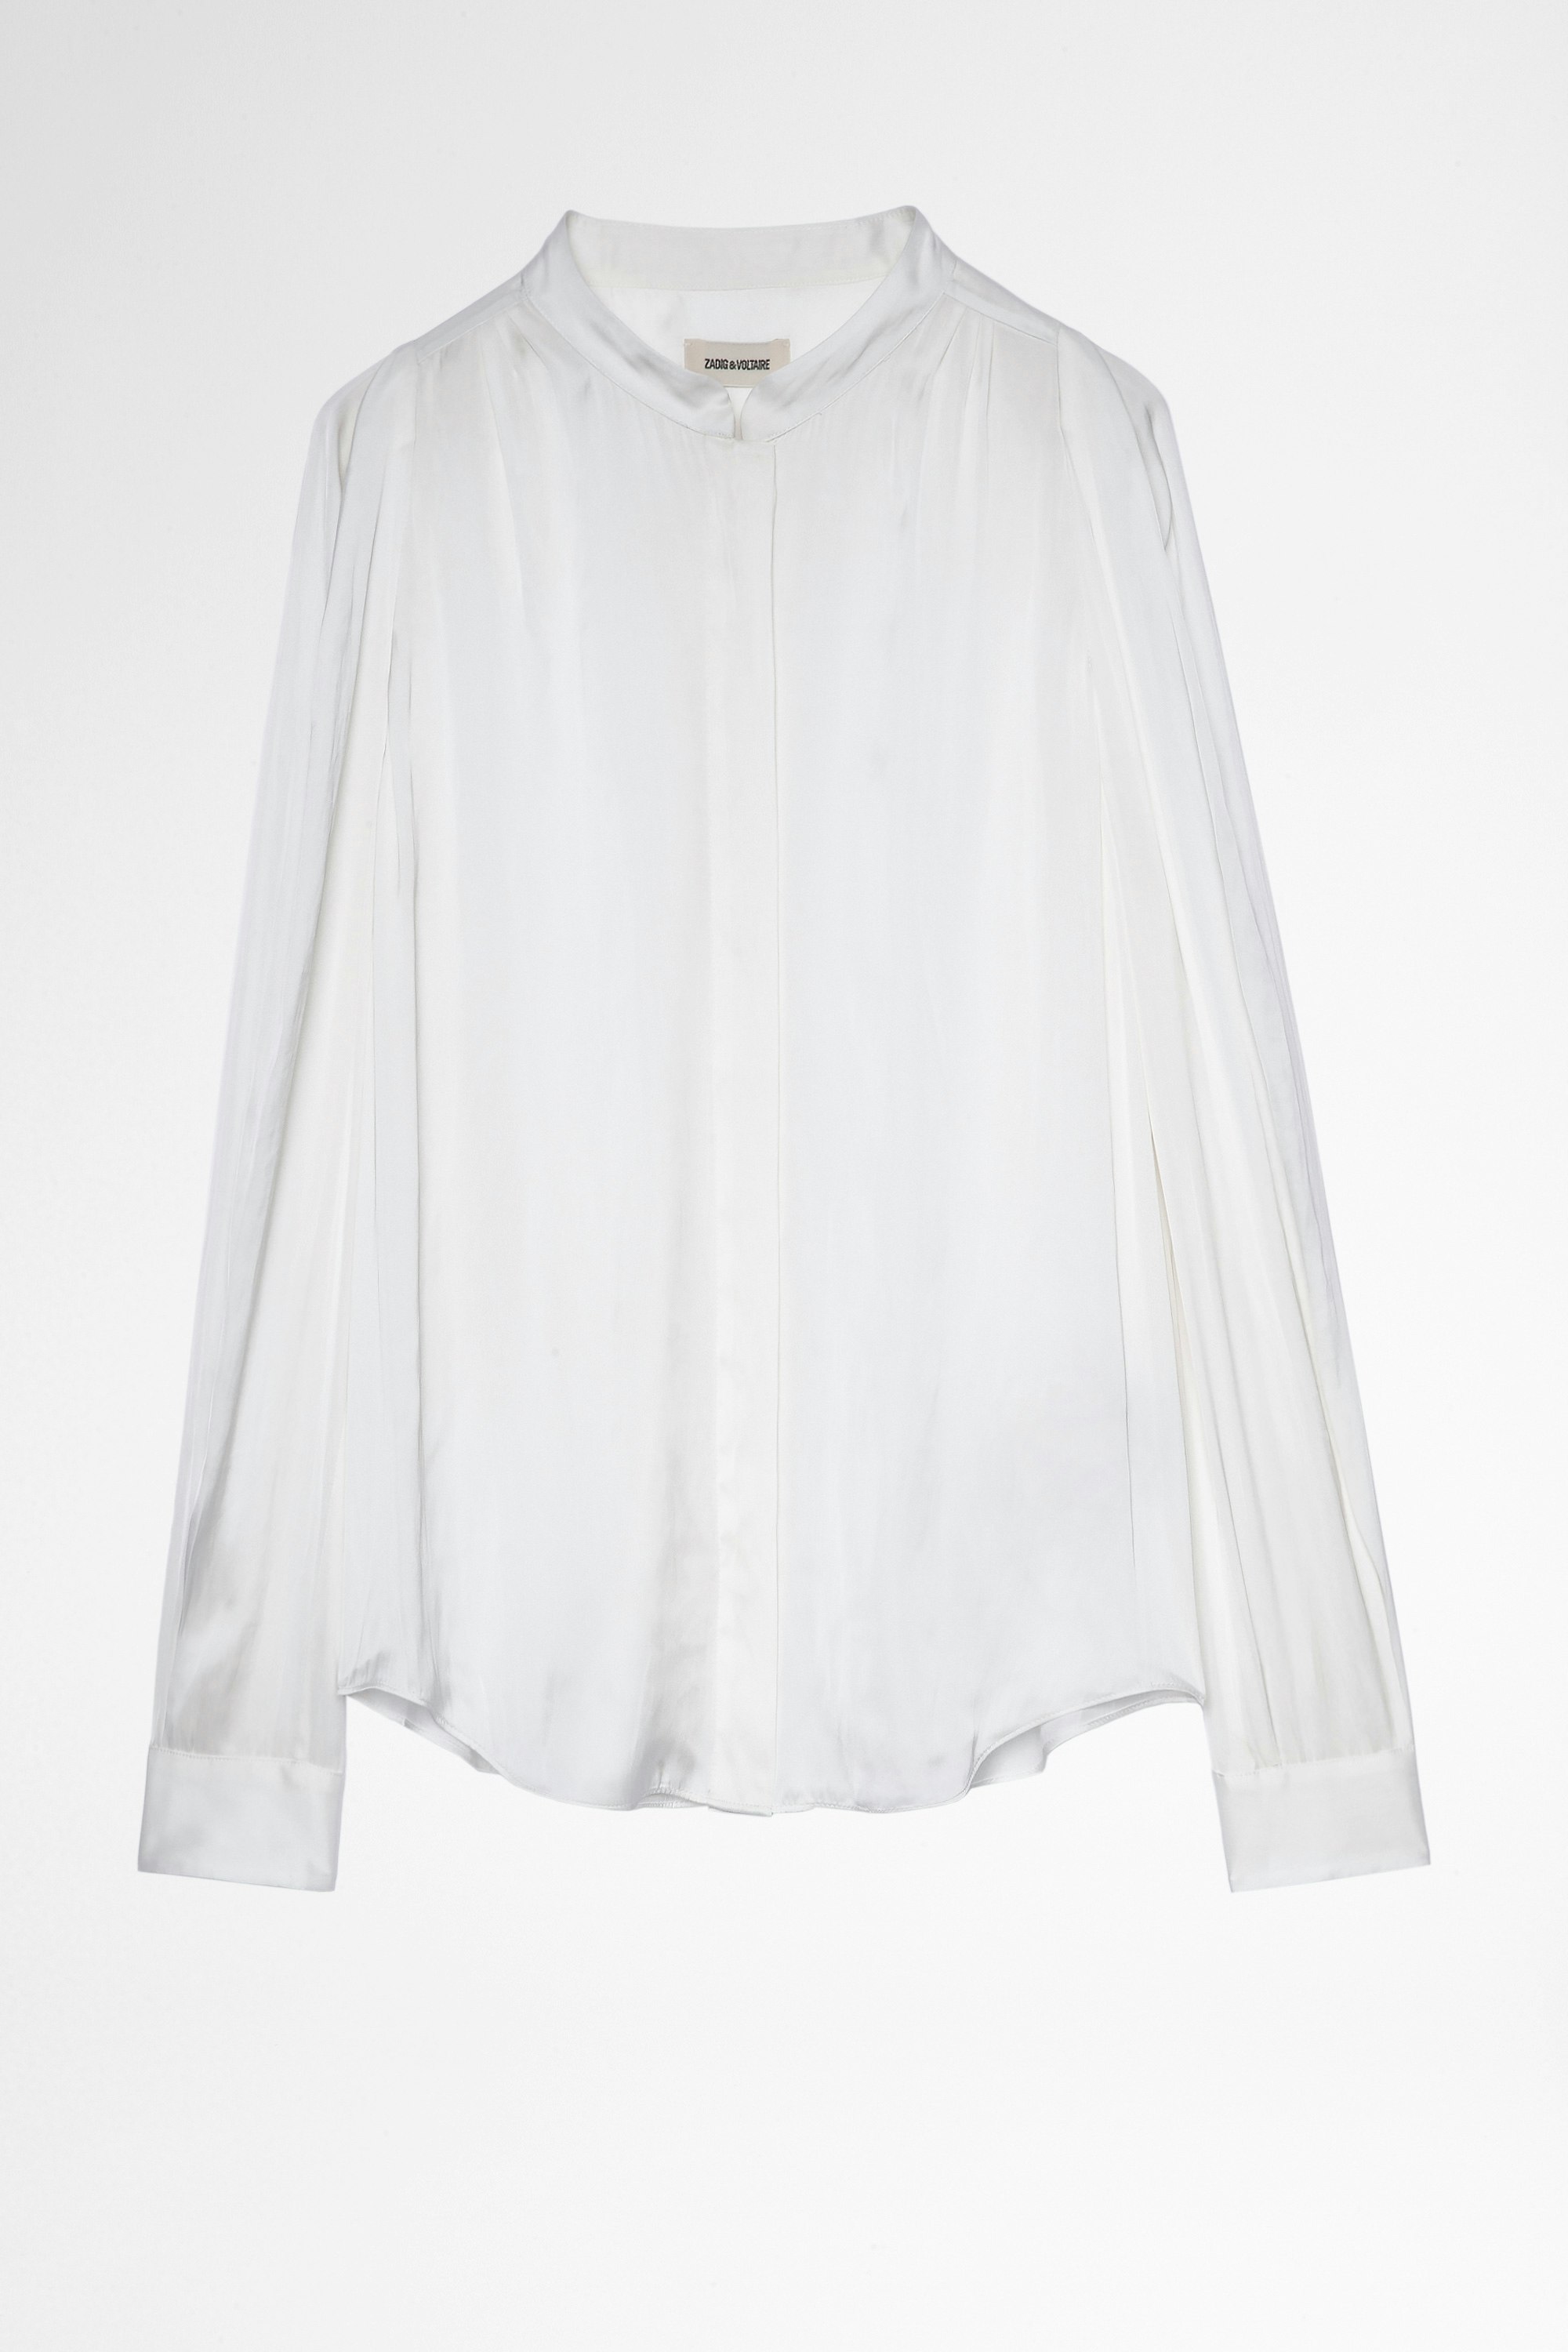 Touchy Shirt  Women's long-sleeved white satin blouse